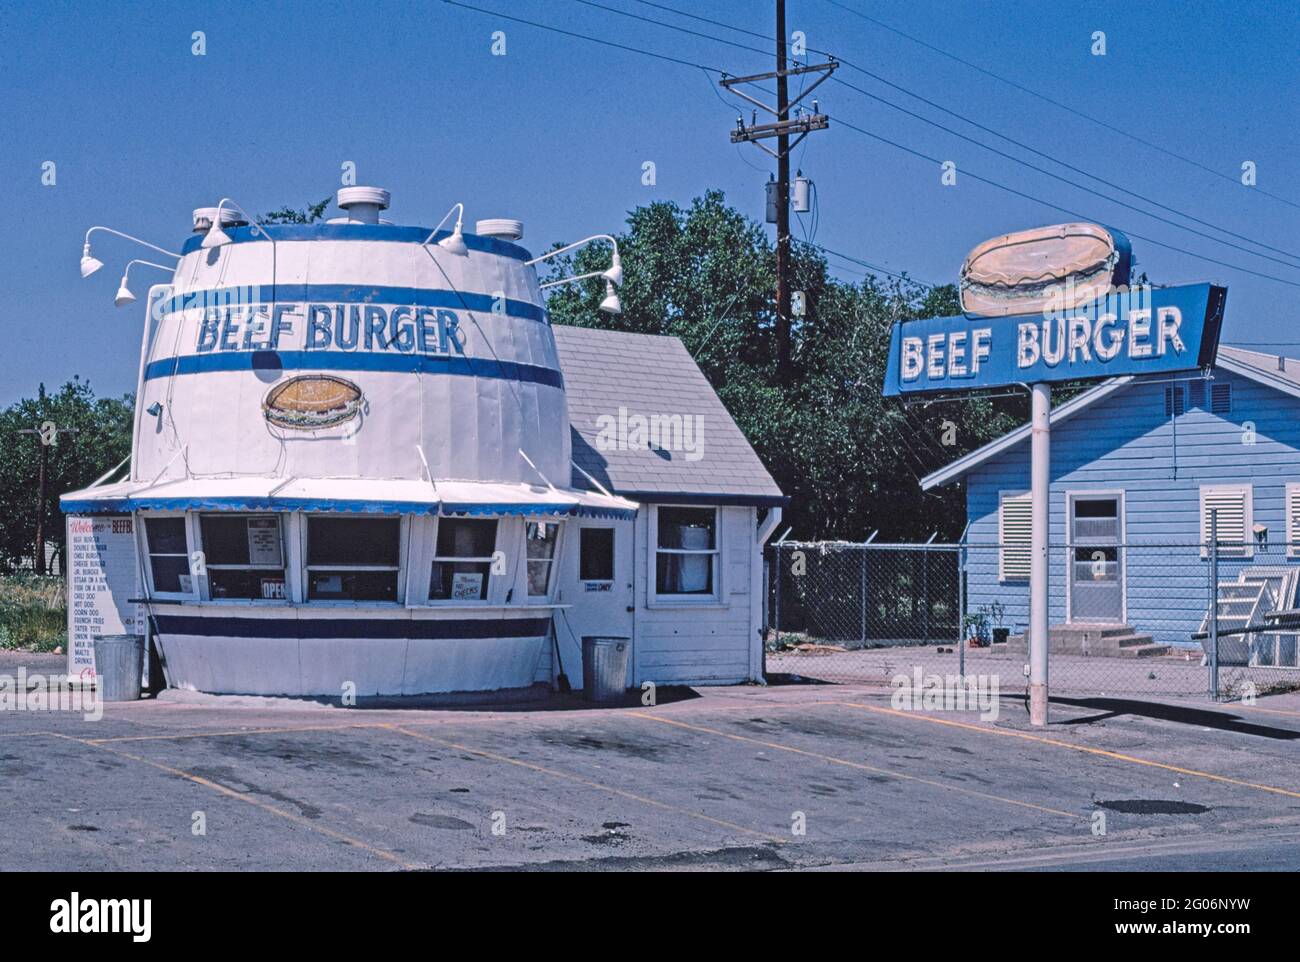 1980s America - Beef Burger, Amarillo, Texas 1982 Stock Photo - Alamy